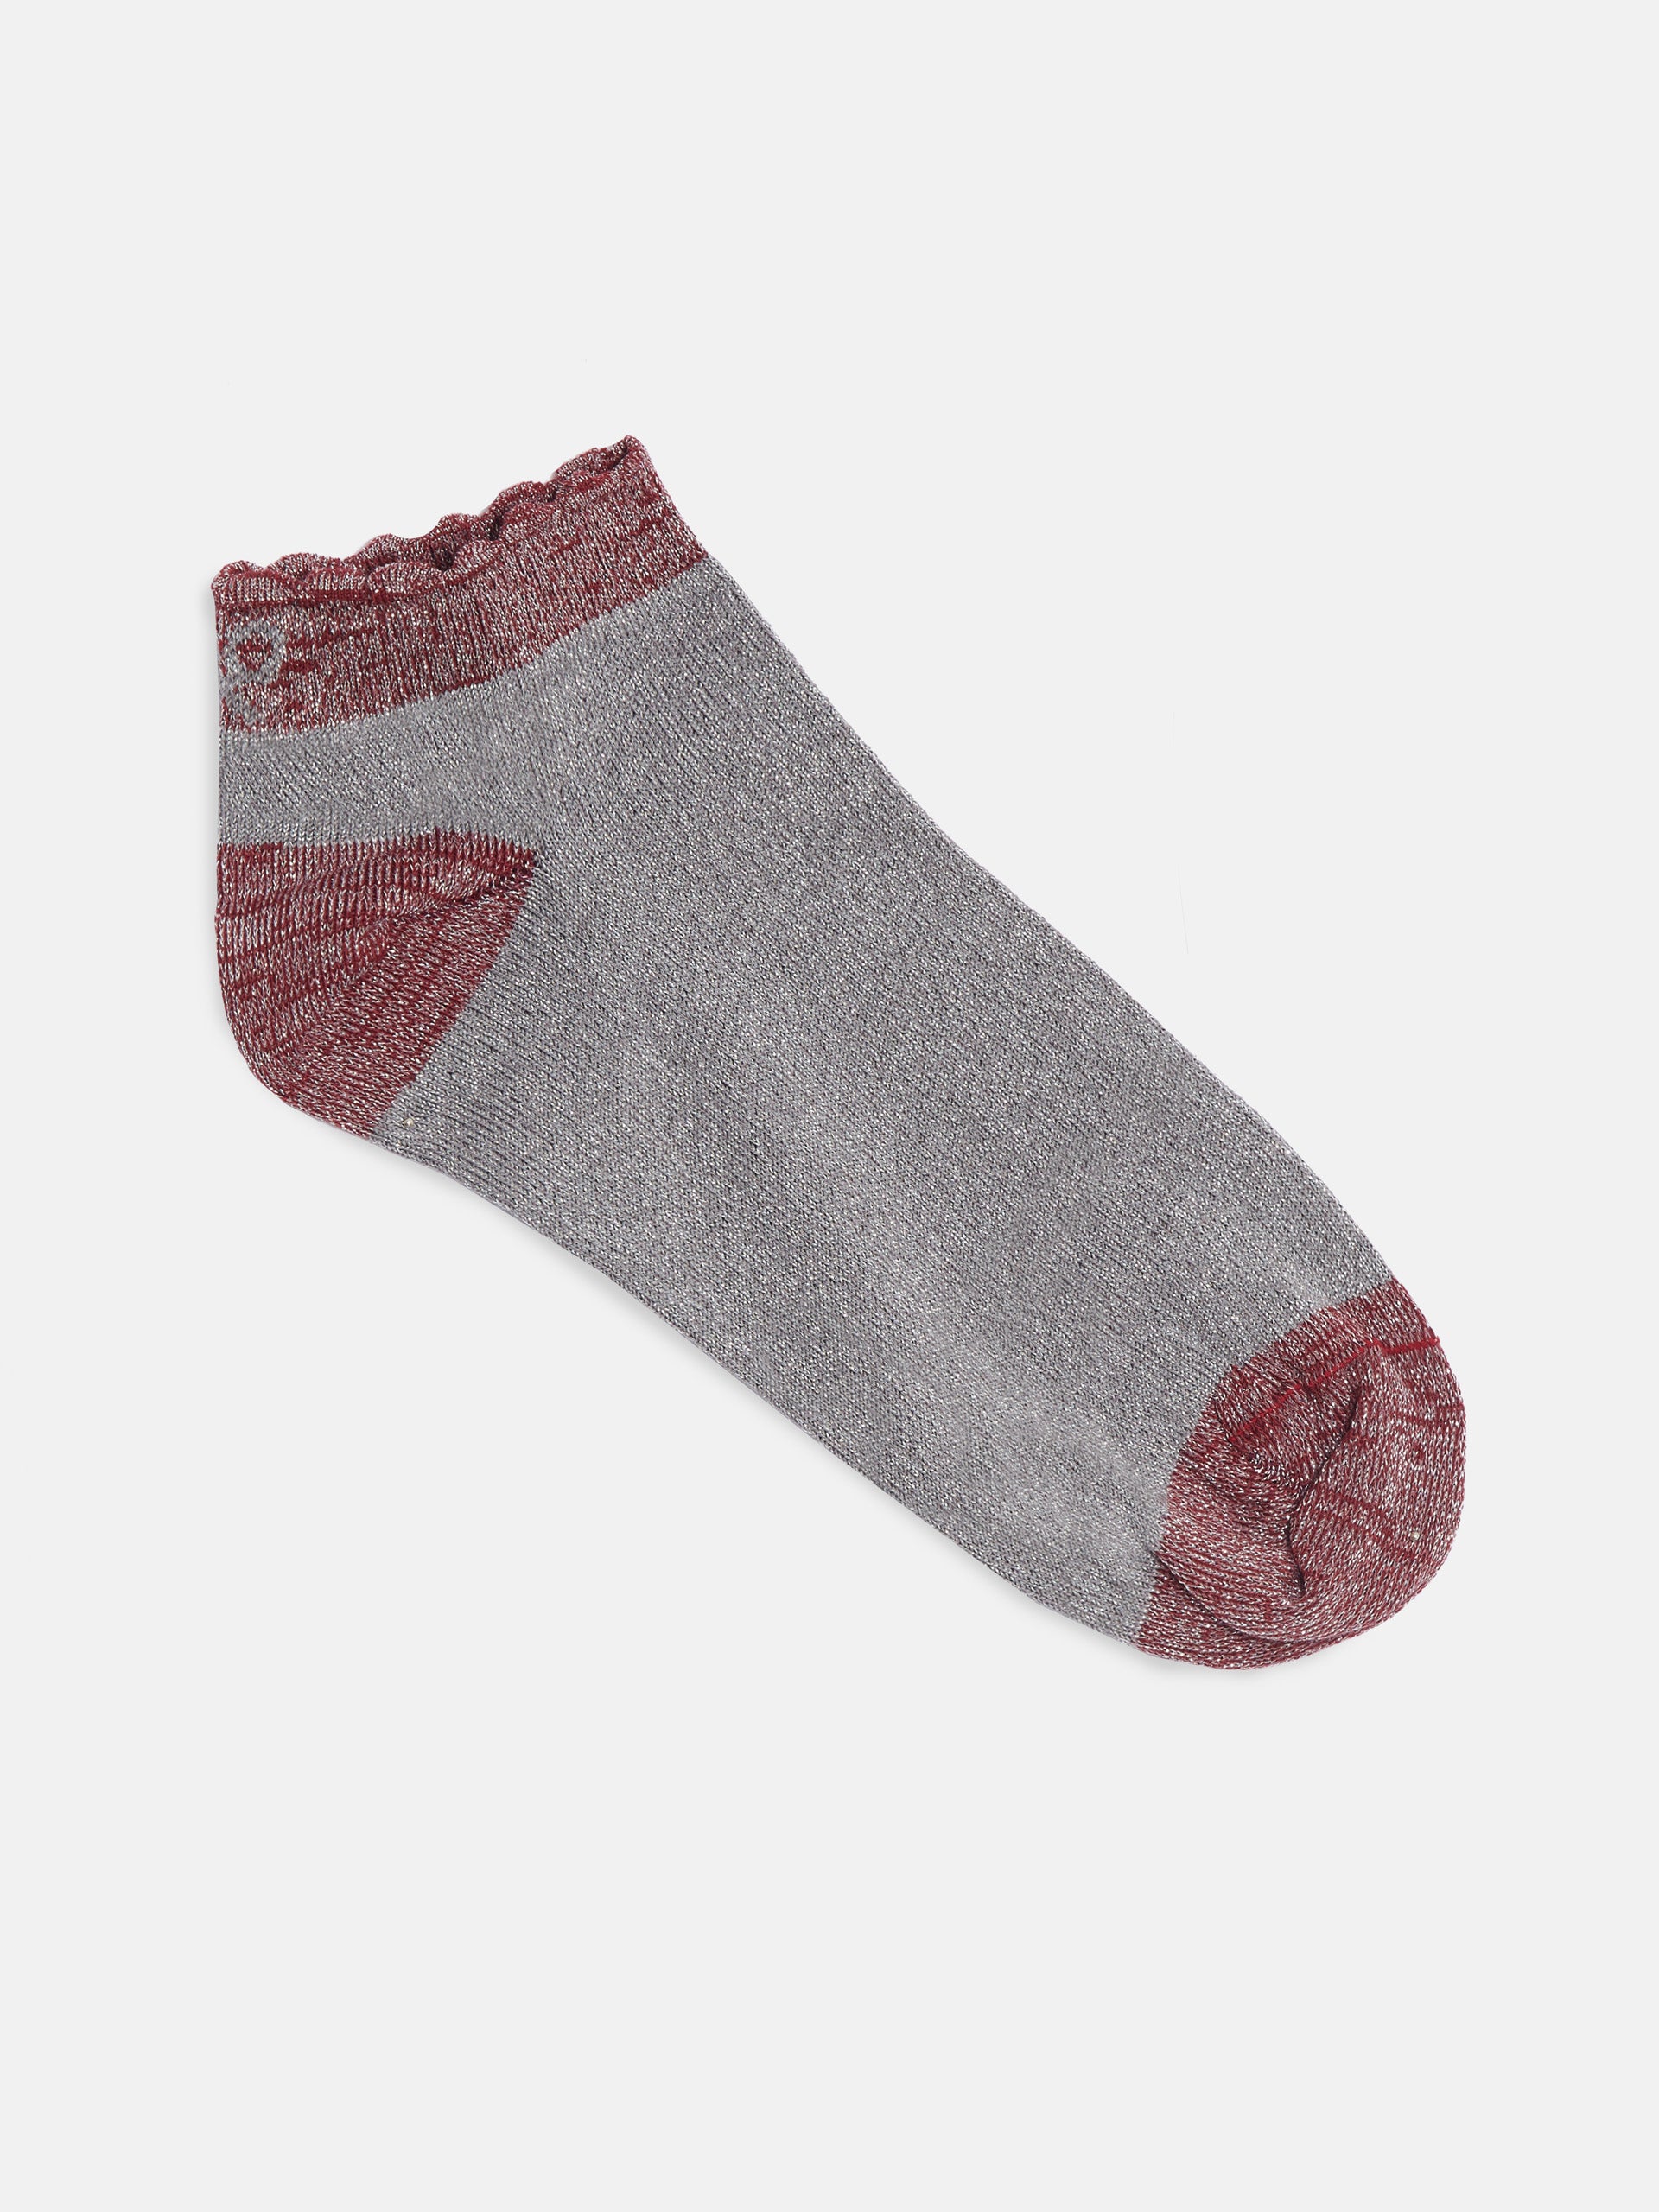 Silver lurex ankle sock